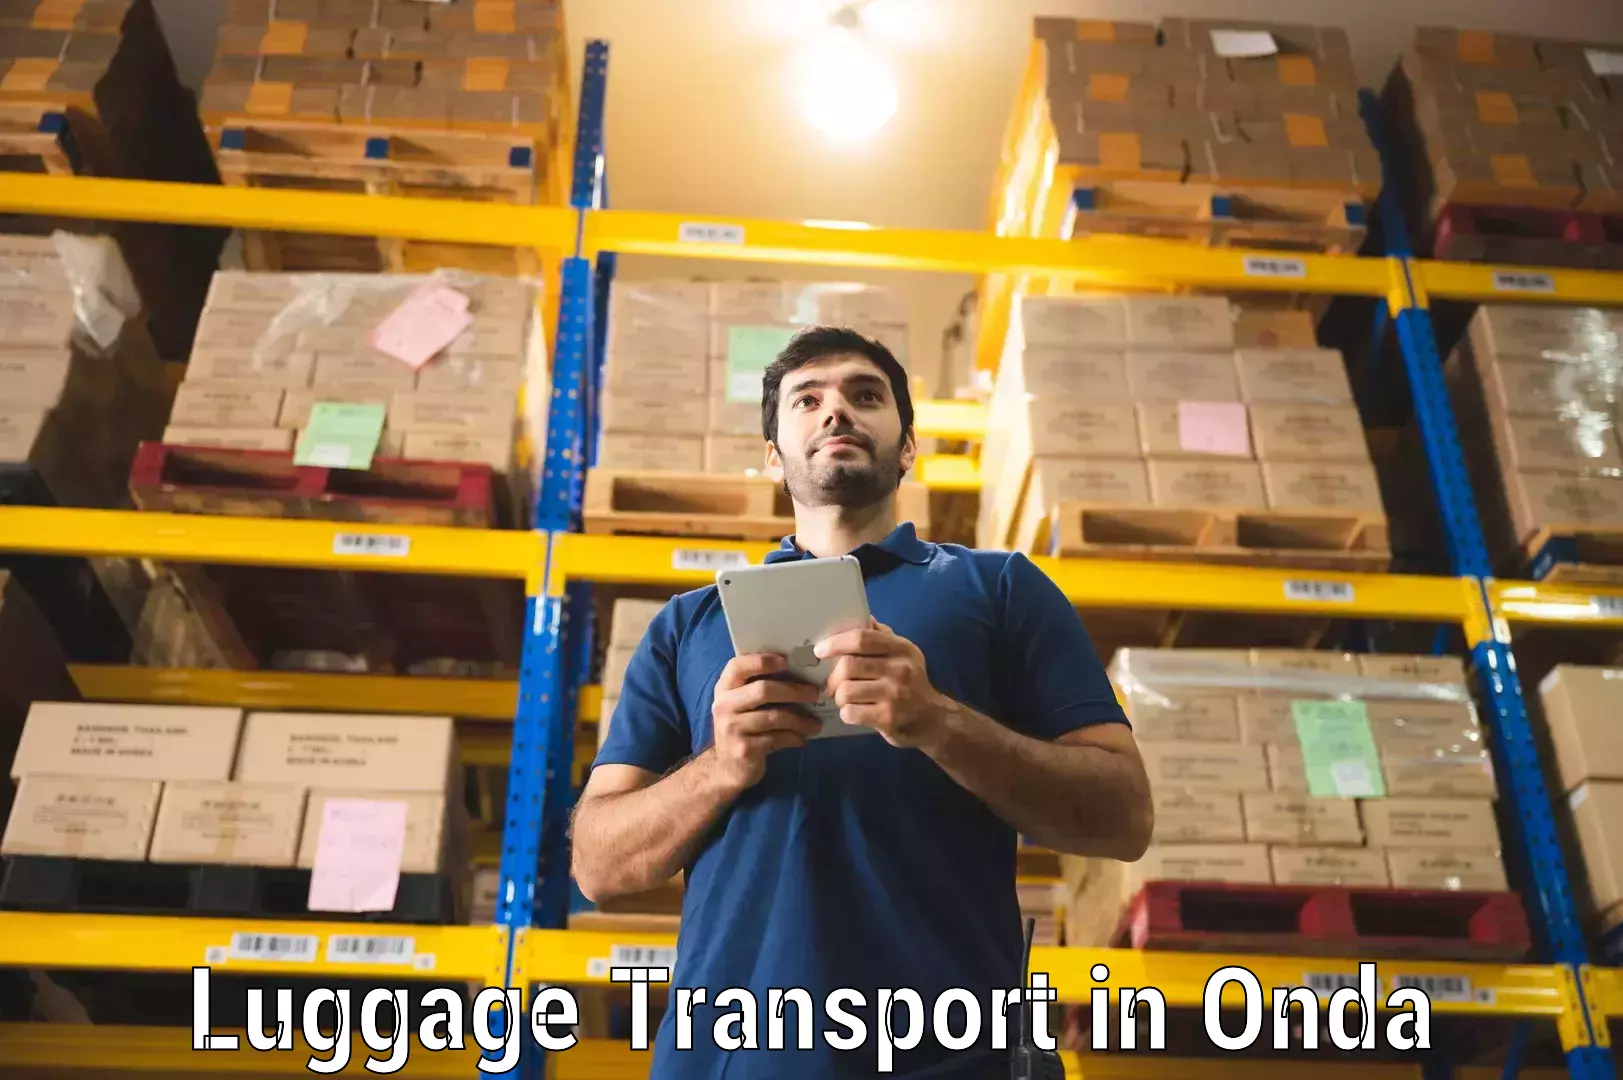 Corporate baggage transport in Onda